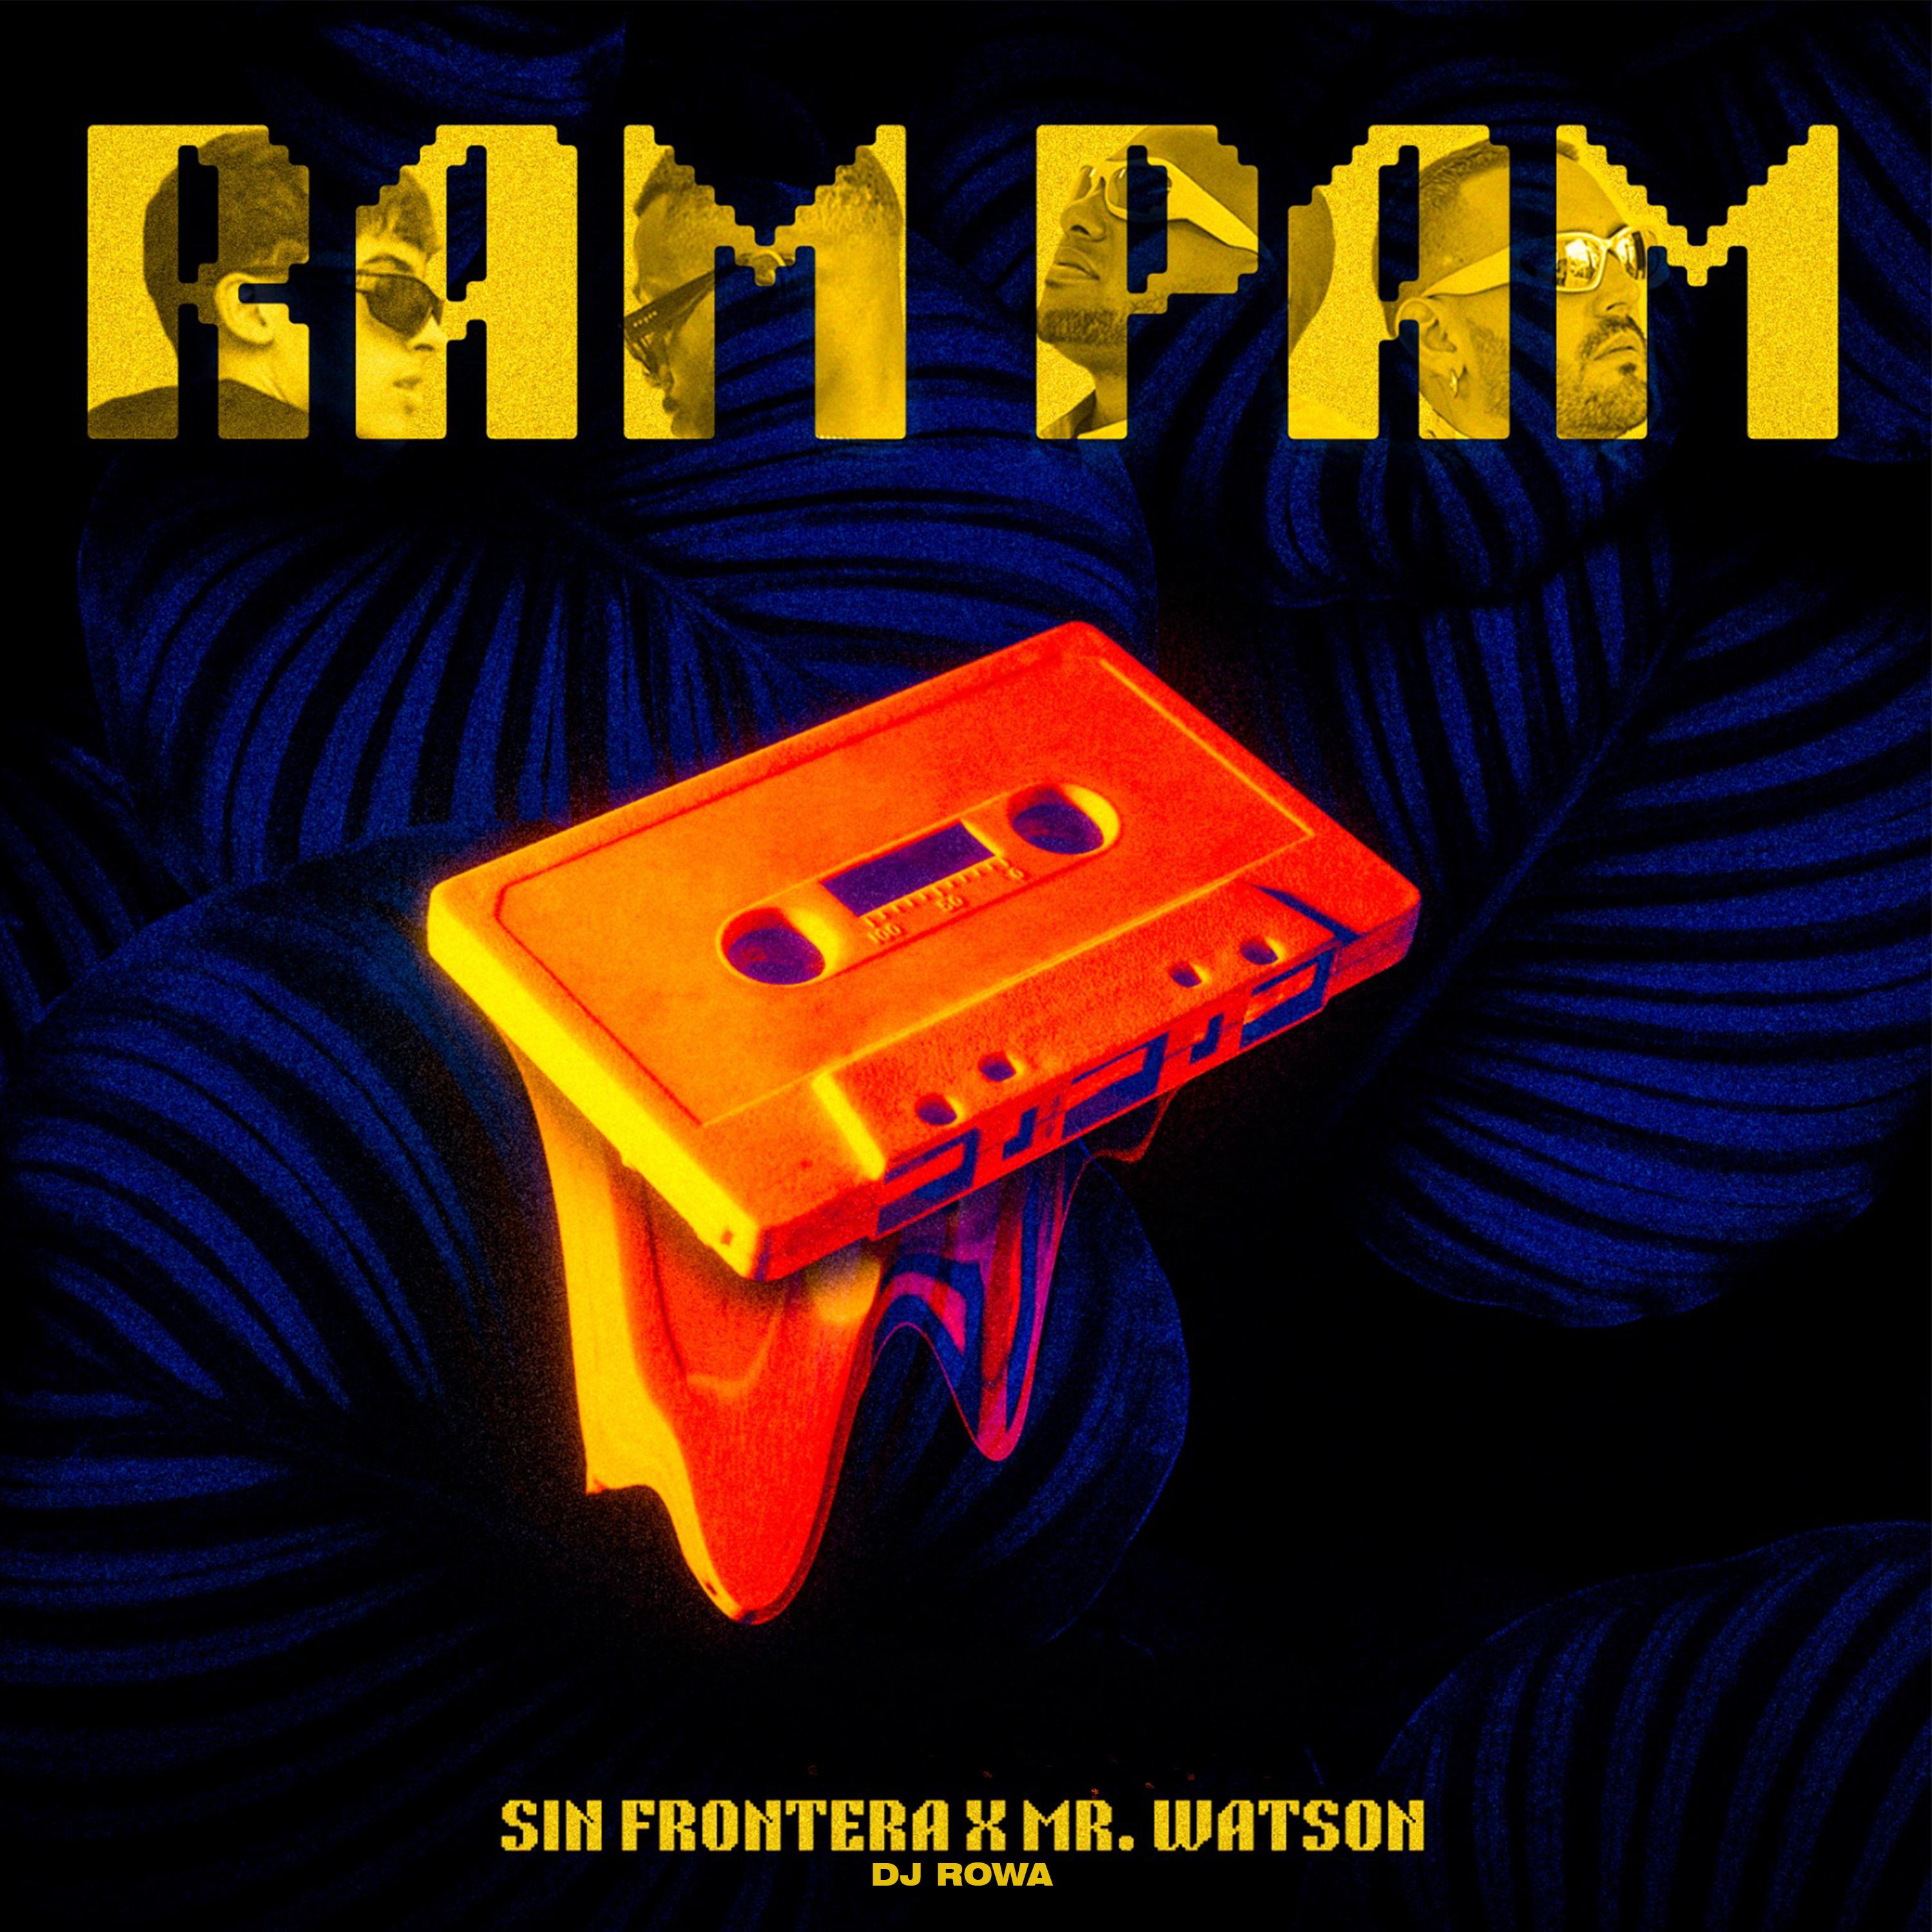 Постер альбома Ram Pam